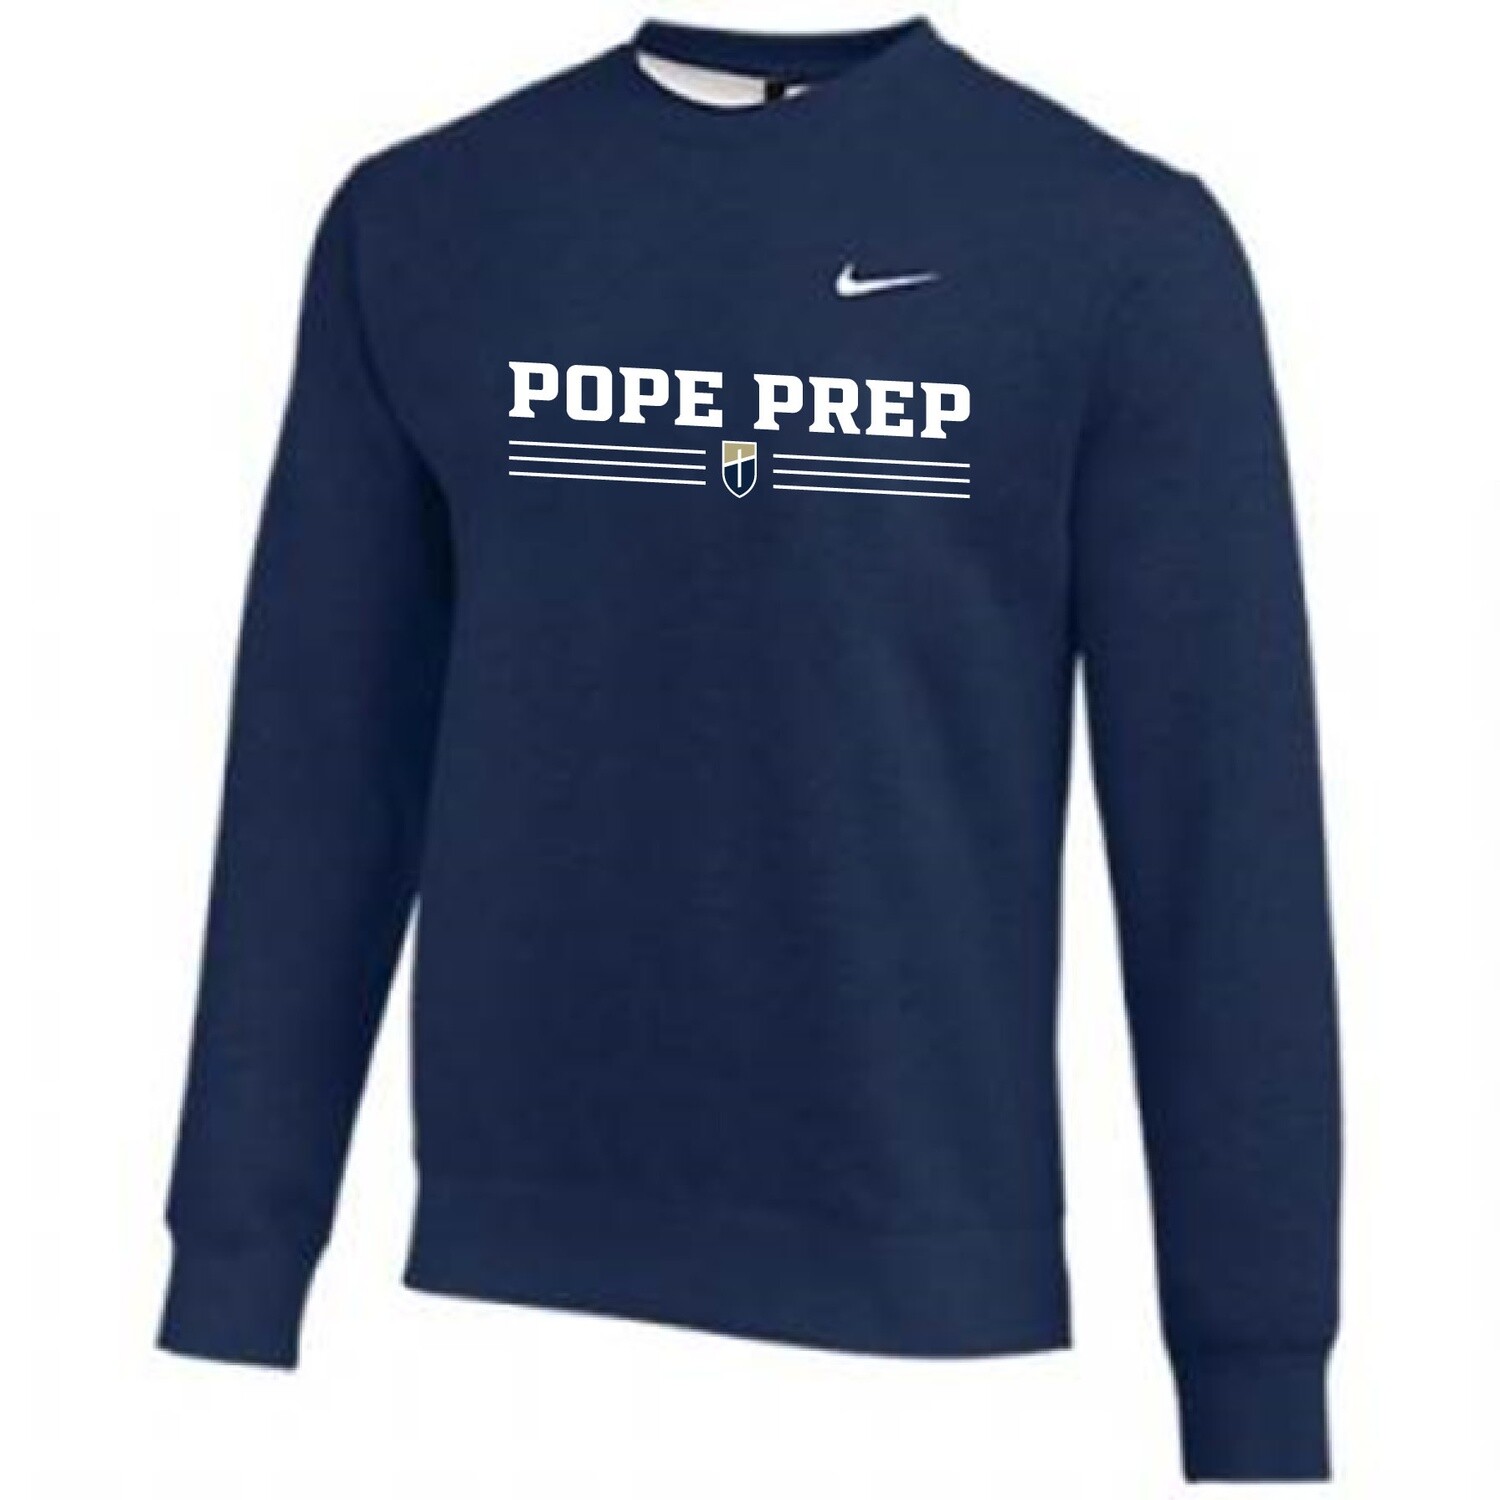 POPE PREP Shield /Lines Nike Sweatshirt, Color: Navy, Size: SM